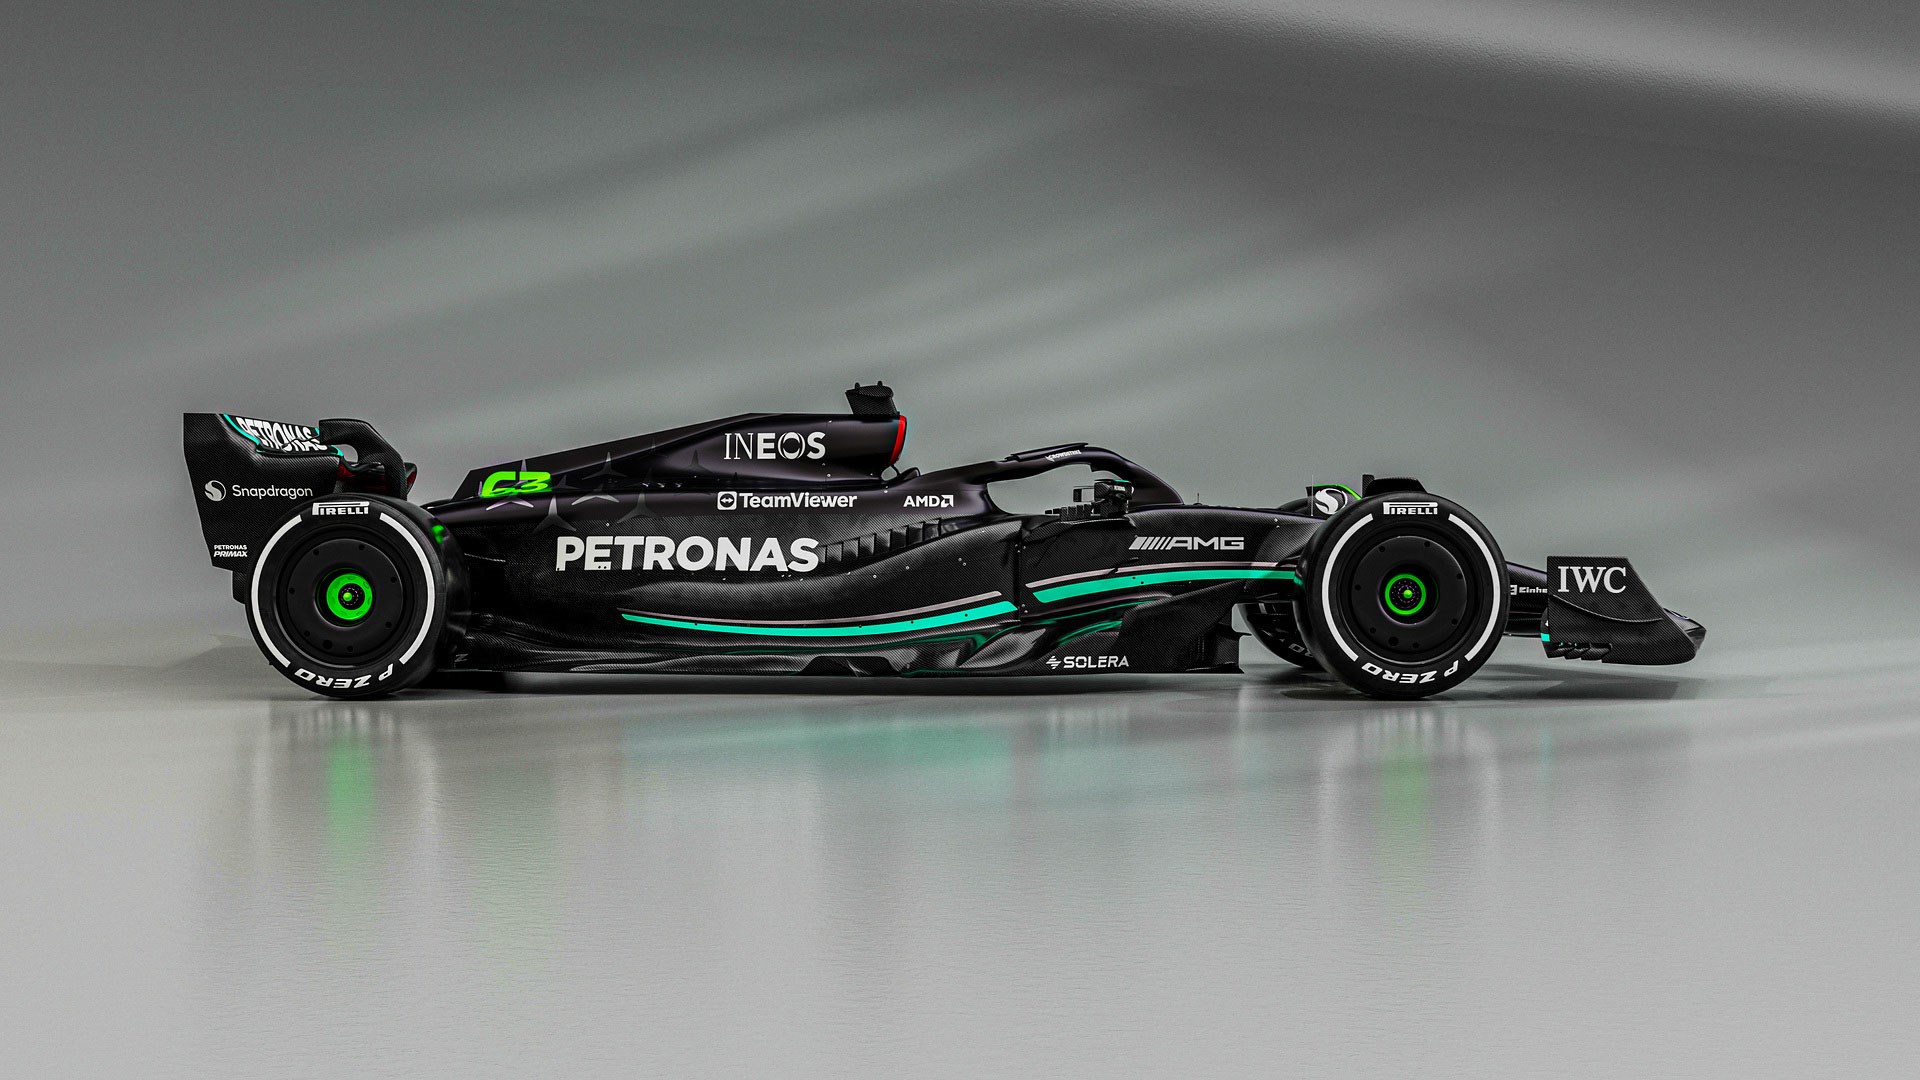 Wallpaper race, sport, formula 1, the car, Mercedes, Mercedes AMG Petronas  F1 images for desktop, section спорт - download